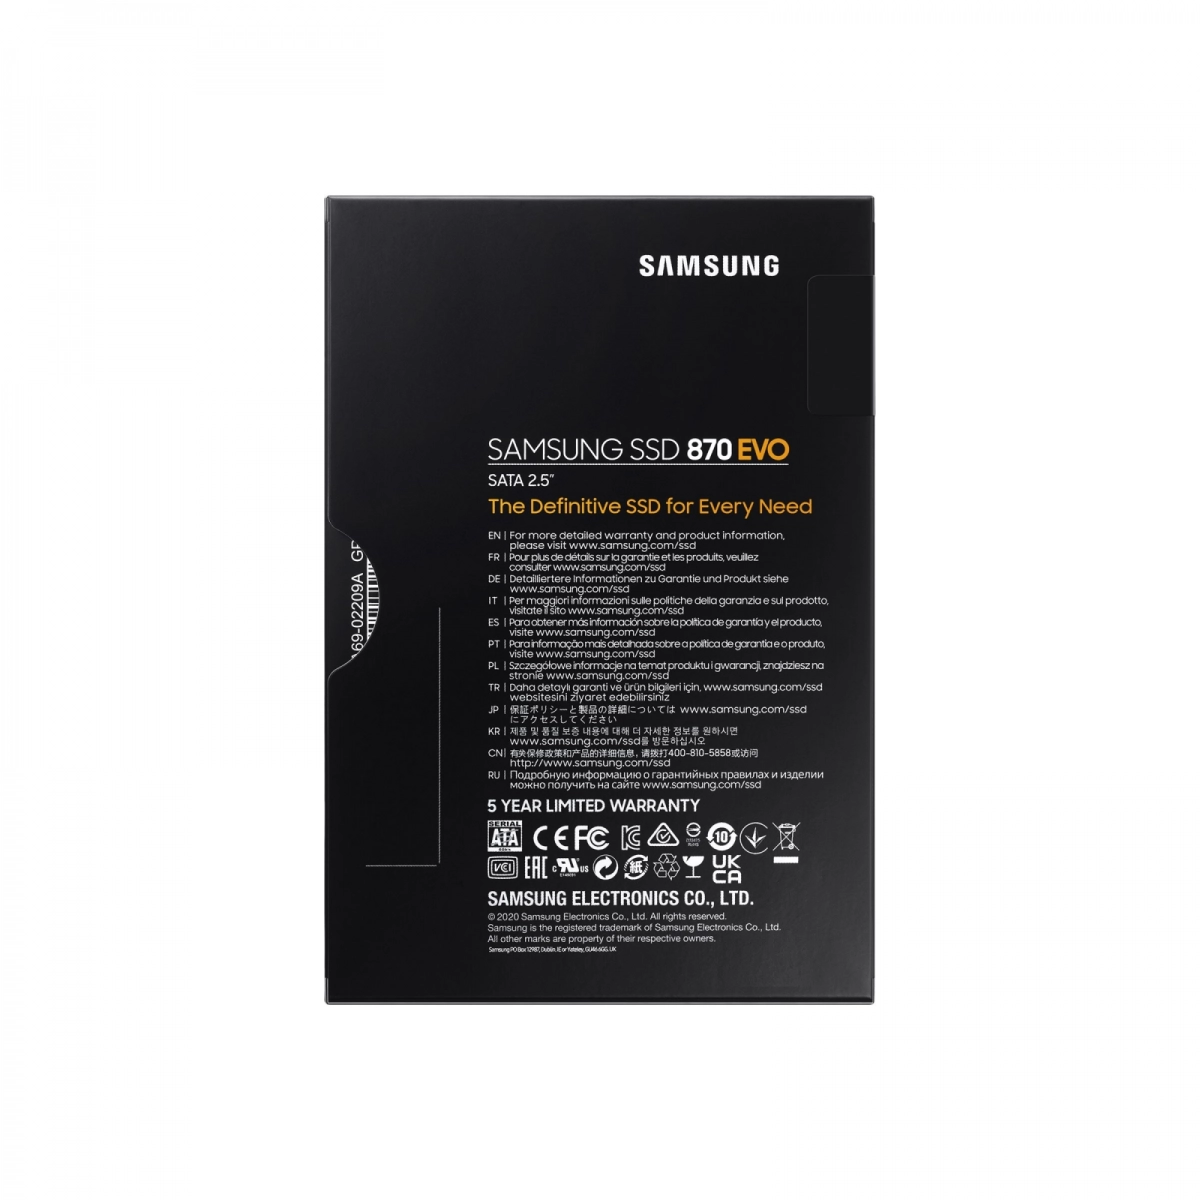 Notebook-Festplatte 1TB, SSD SATA3 für ASUS R752L